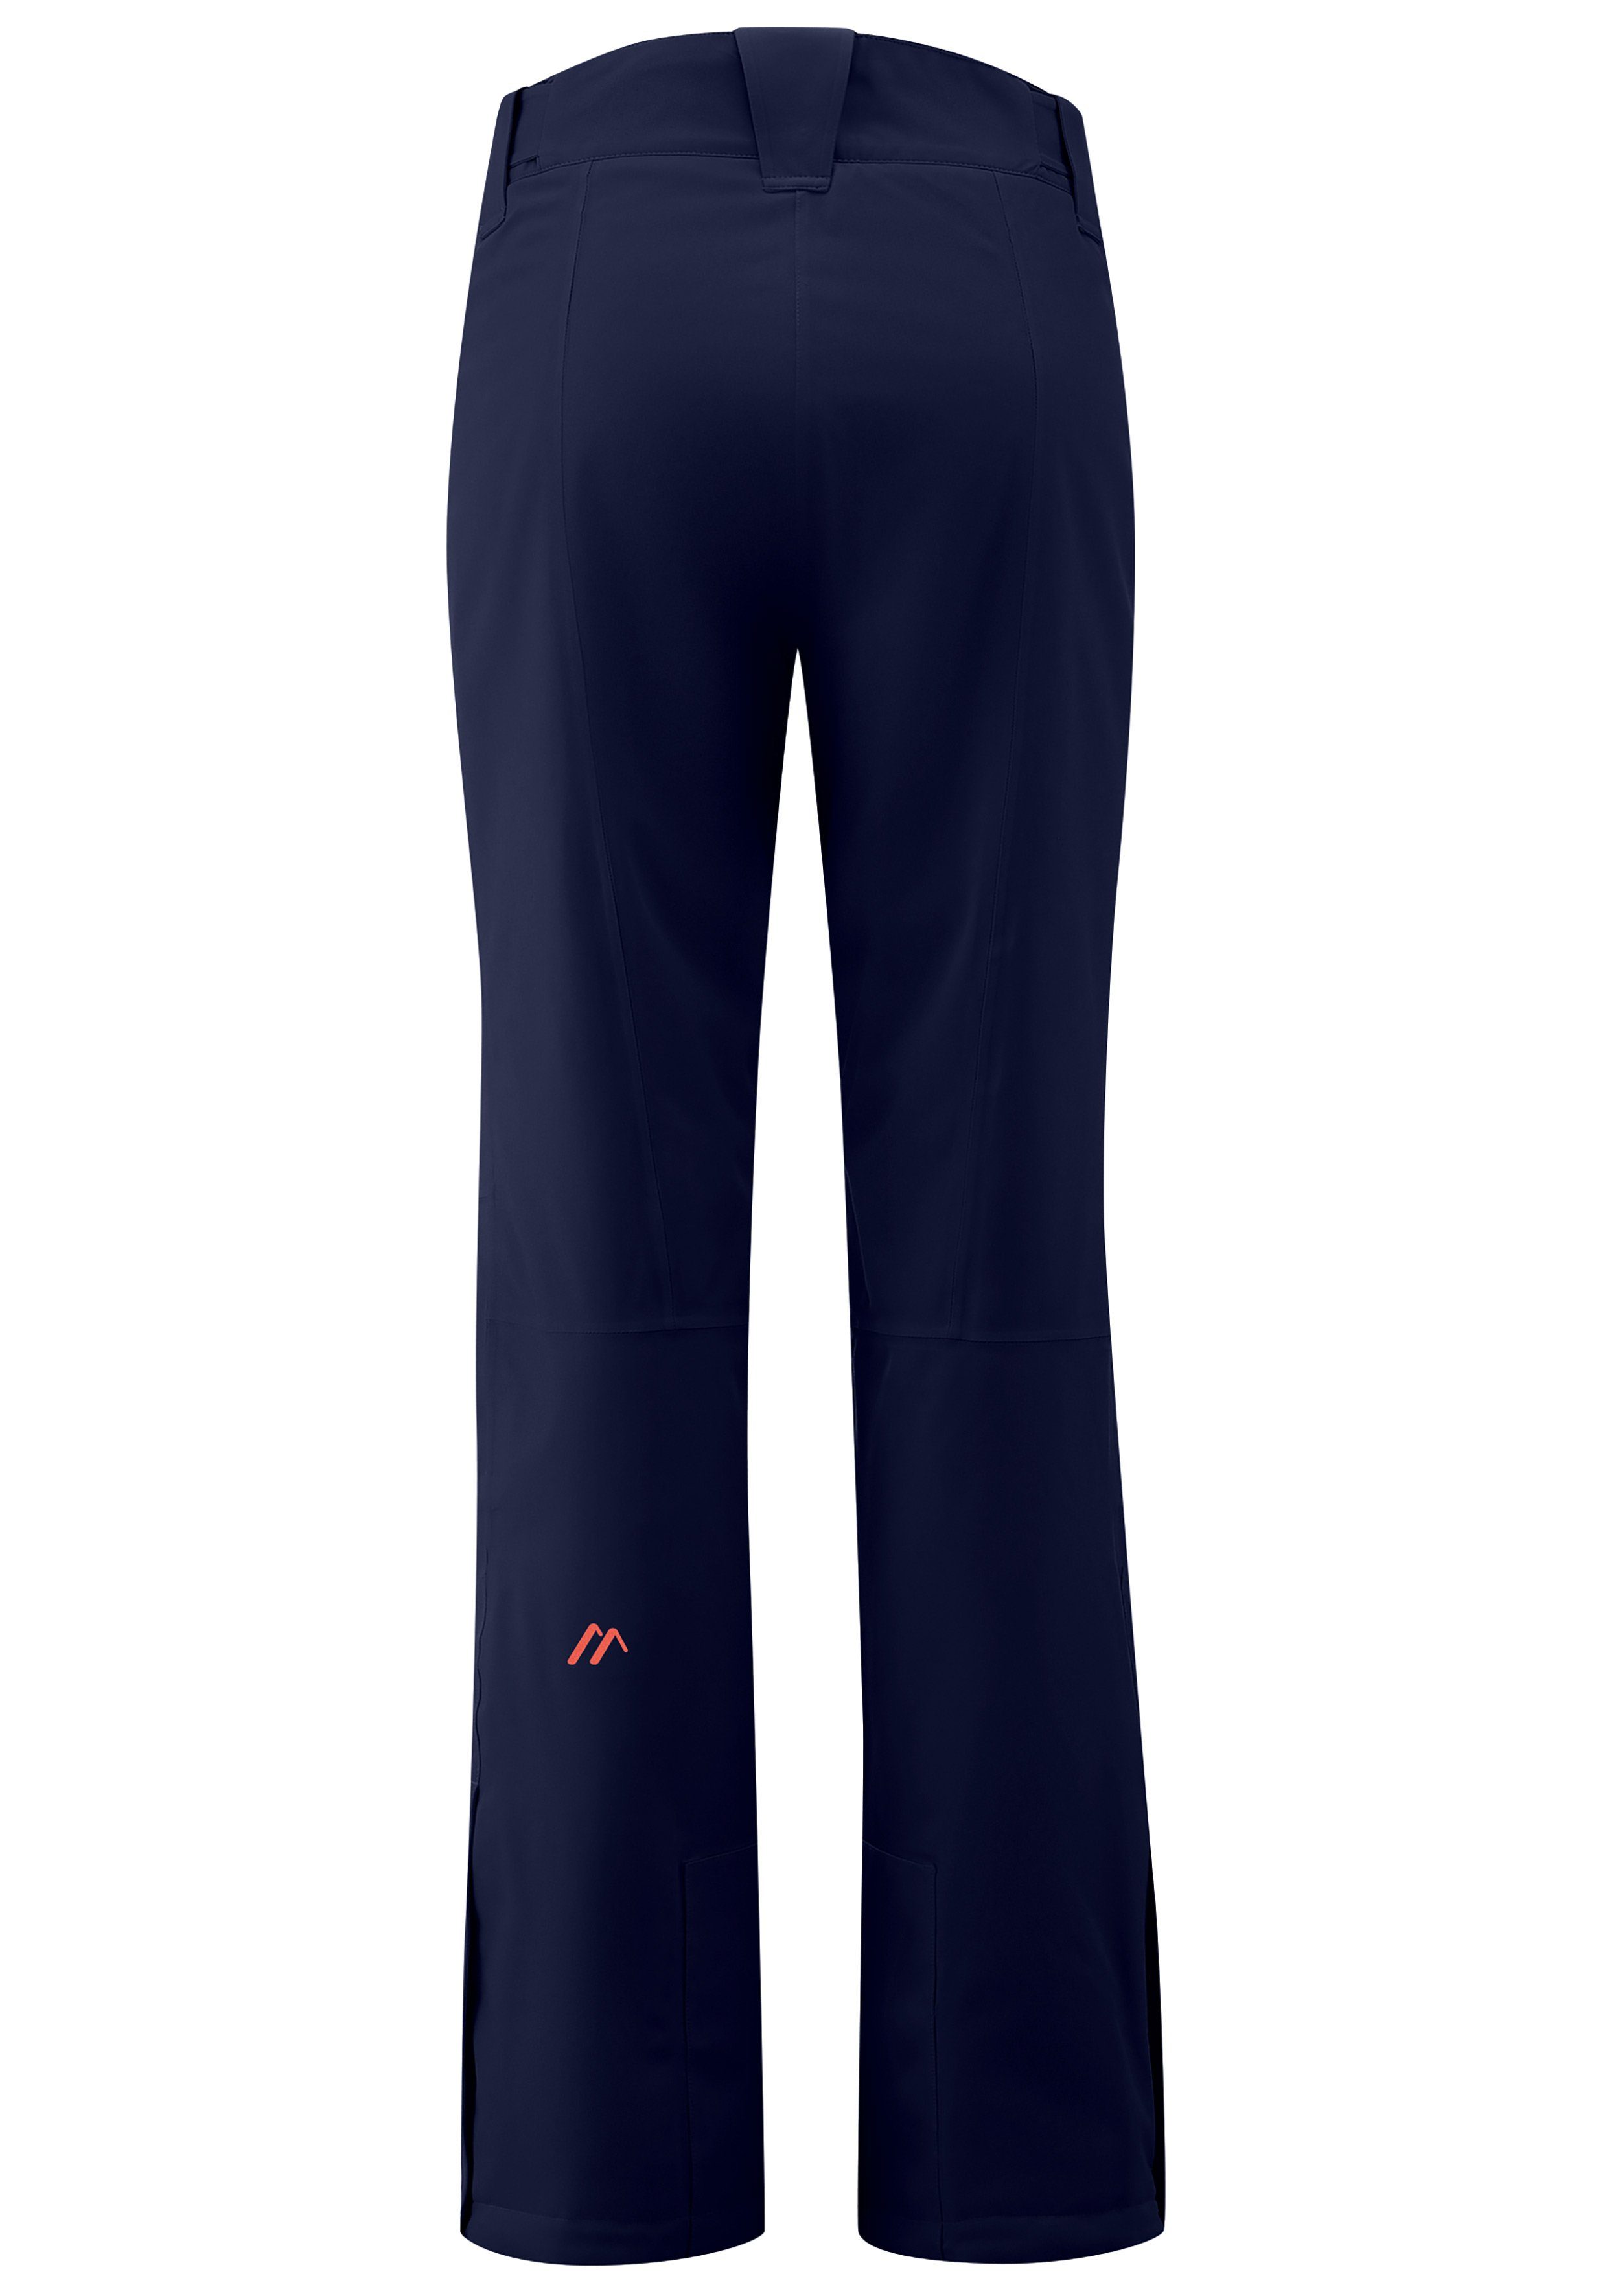 dunkelblau Silhouette in schlanker Sports Skihose Pants Coral Feminin, Skihose sportliche Maier